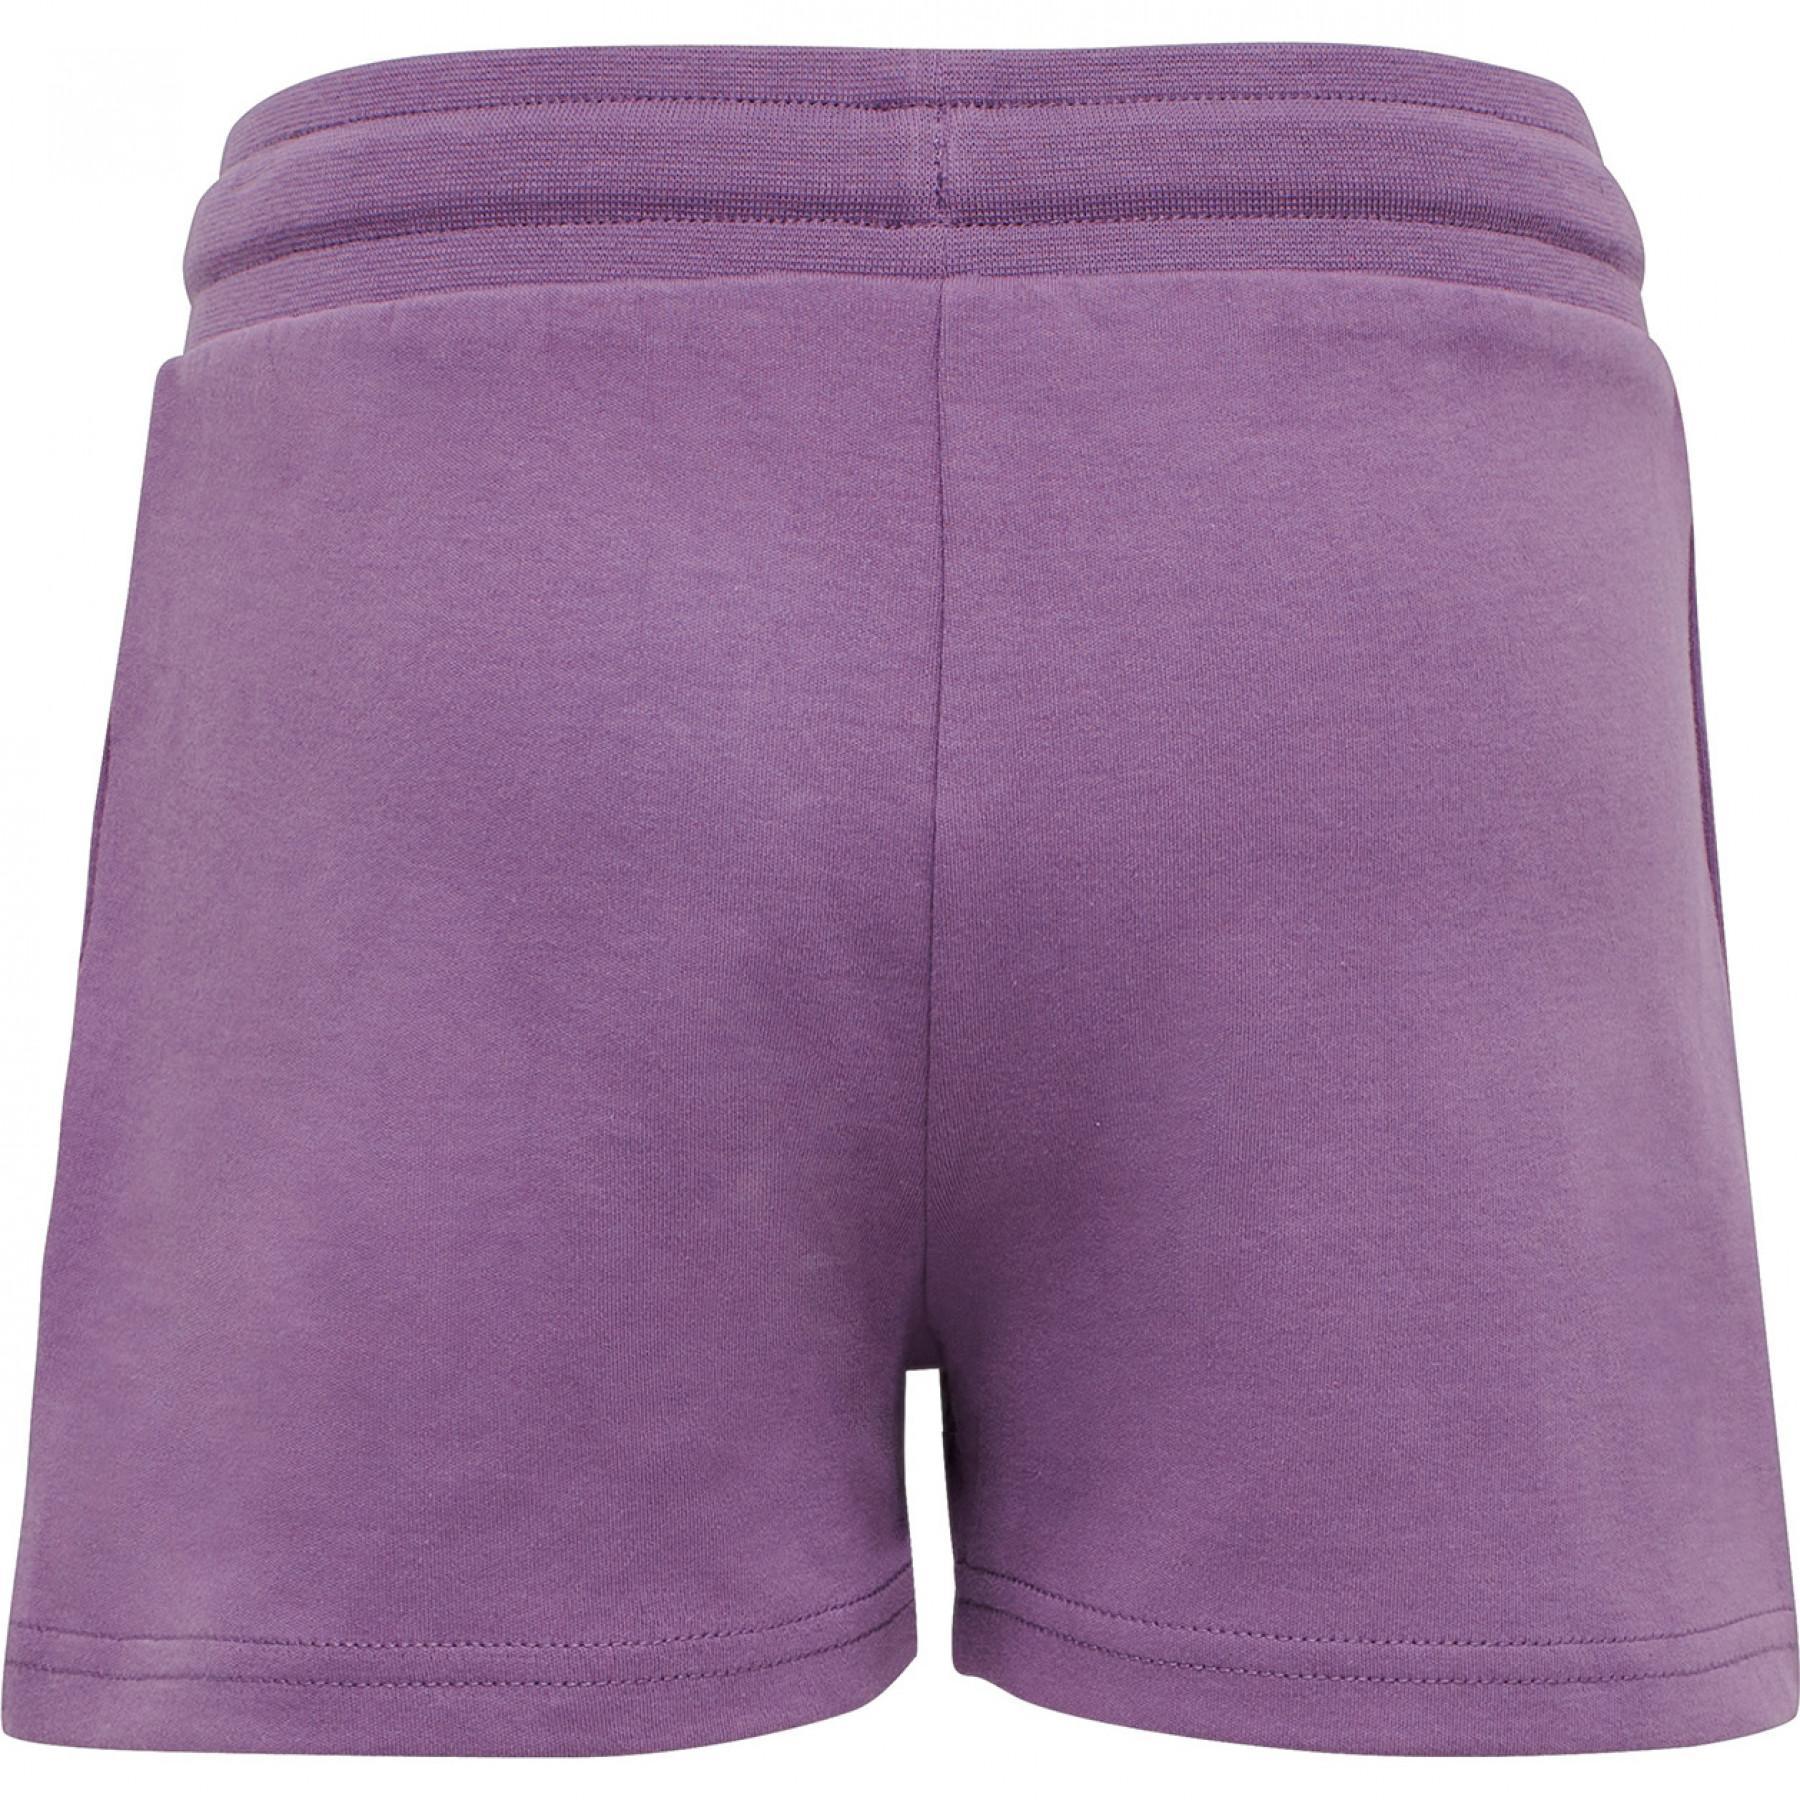 Children's shorts Hummel hmlnille